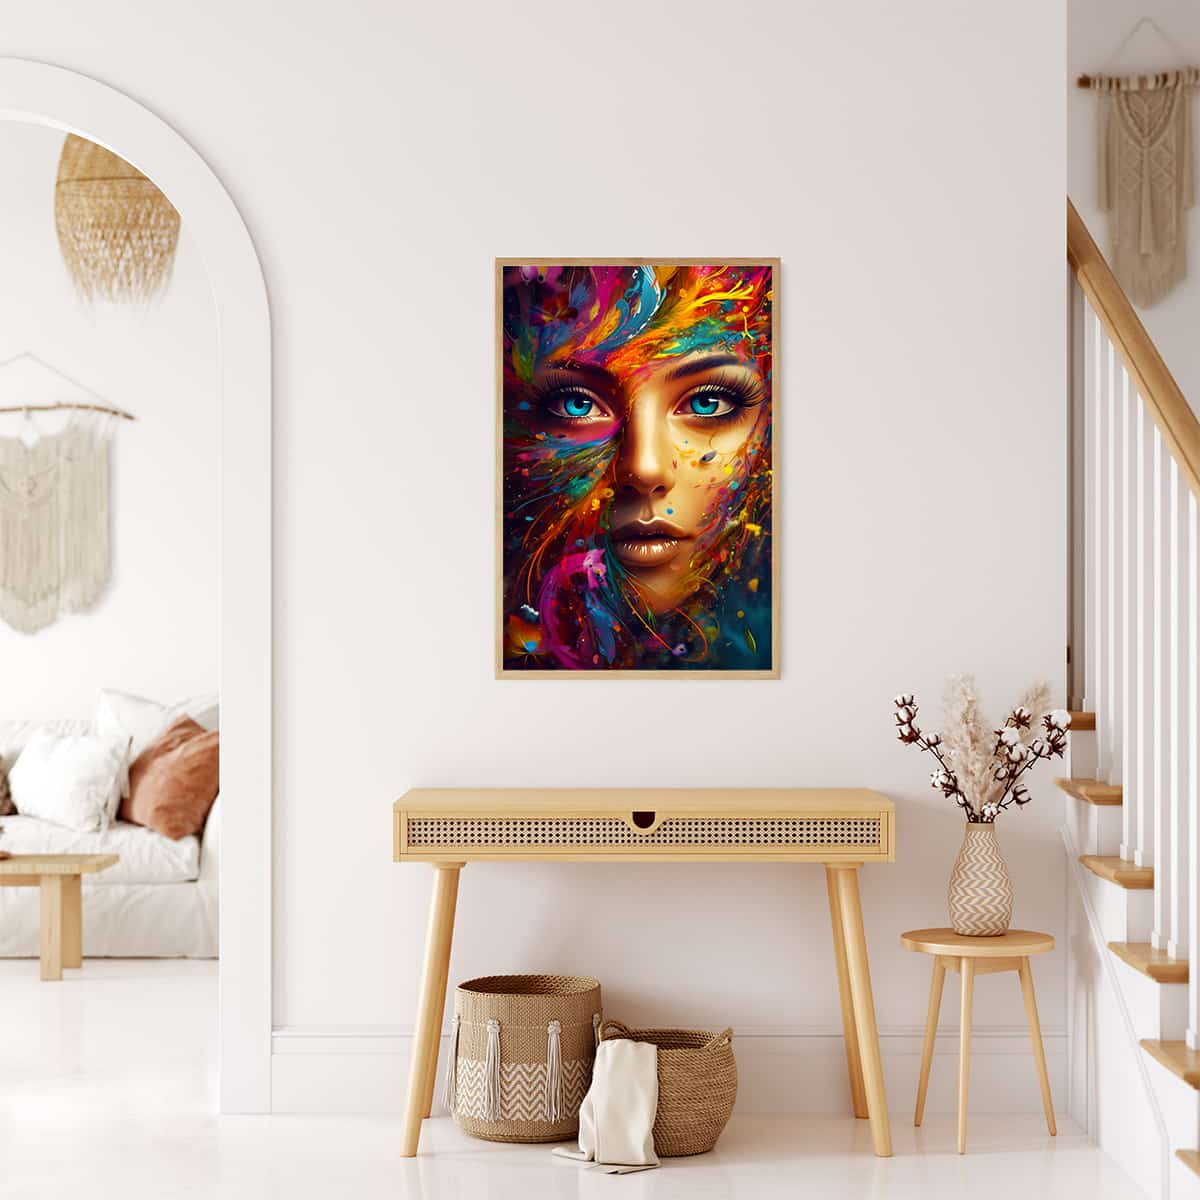 AB Diamond Painting - Colorful Woman - gedruckt in Ultra-HD - AB Diamond, Menschen, Neu eingetroffen, Vertikal